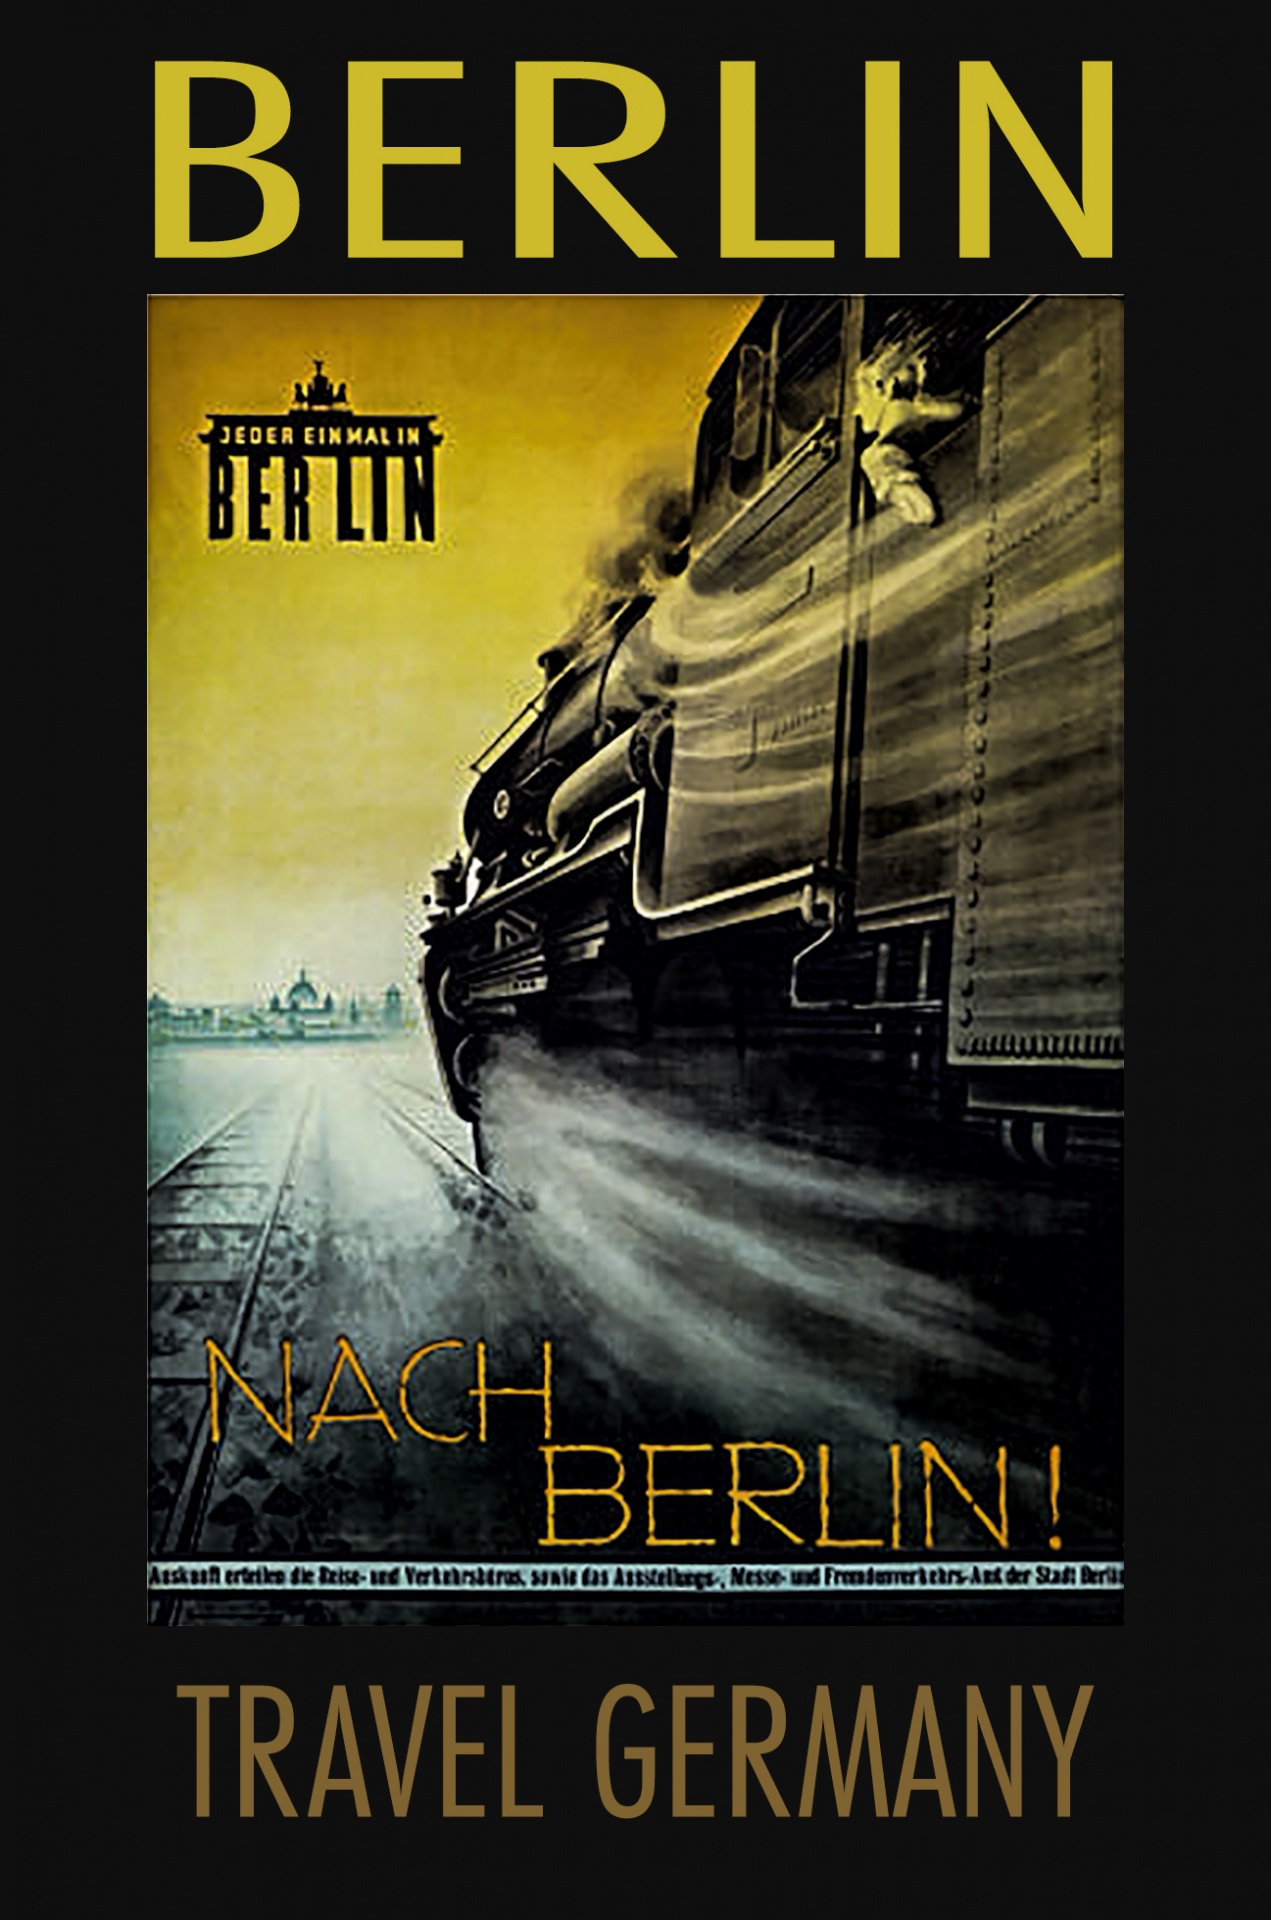 Berlin Germany Poster